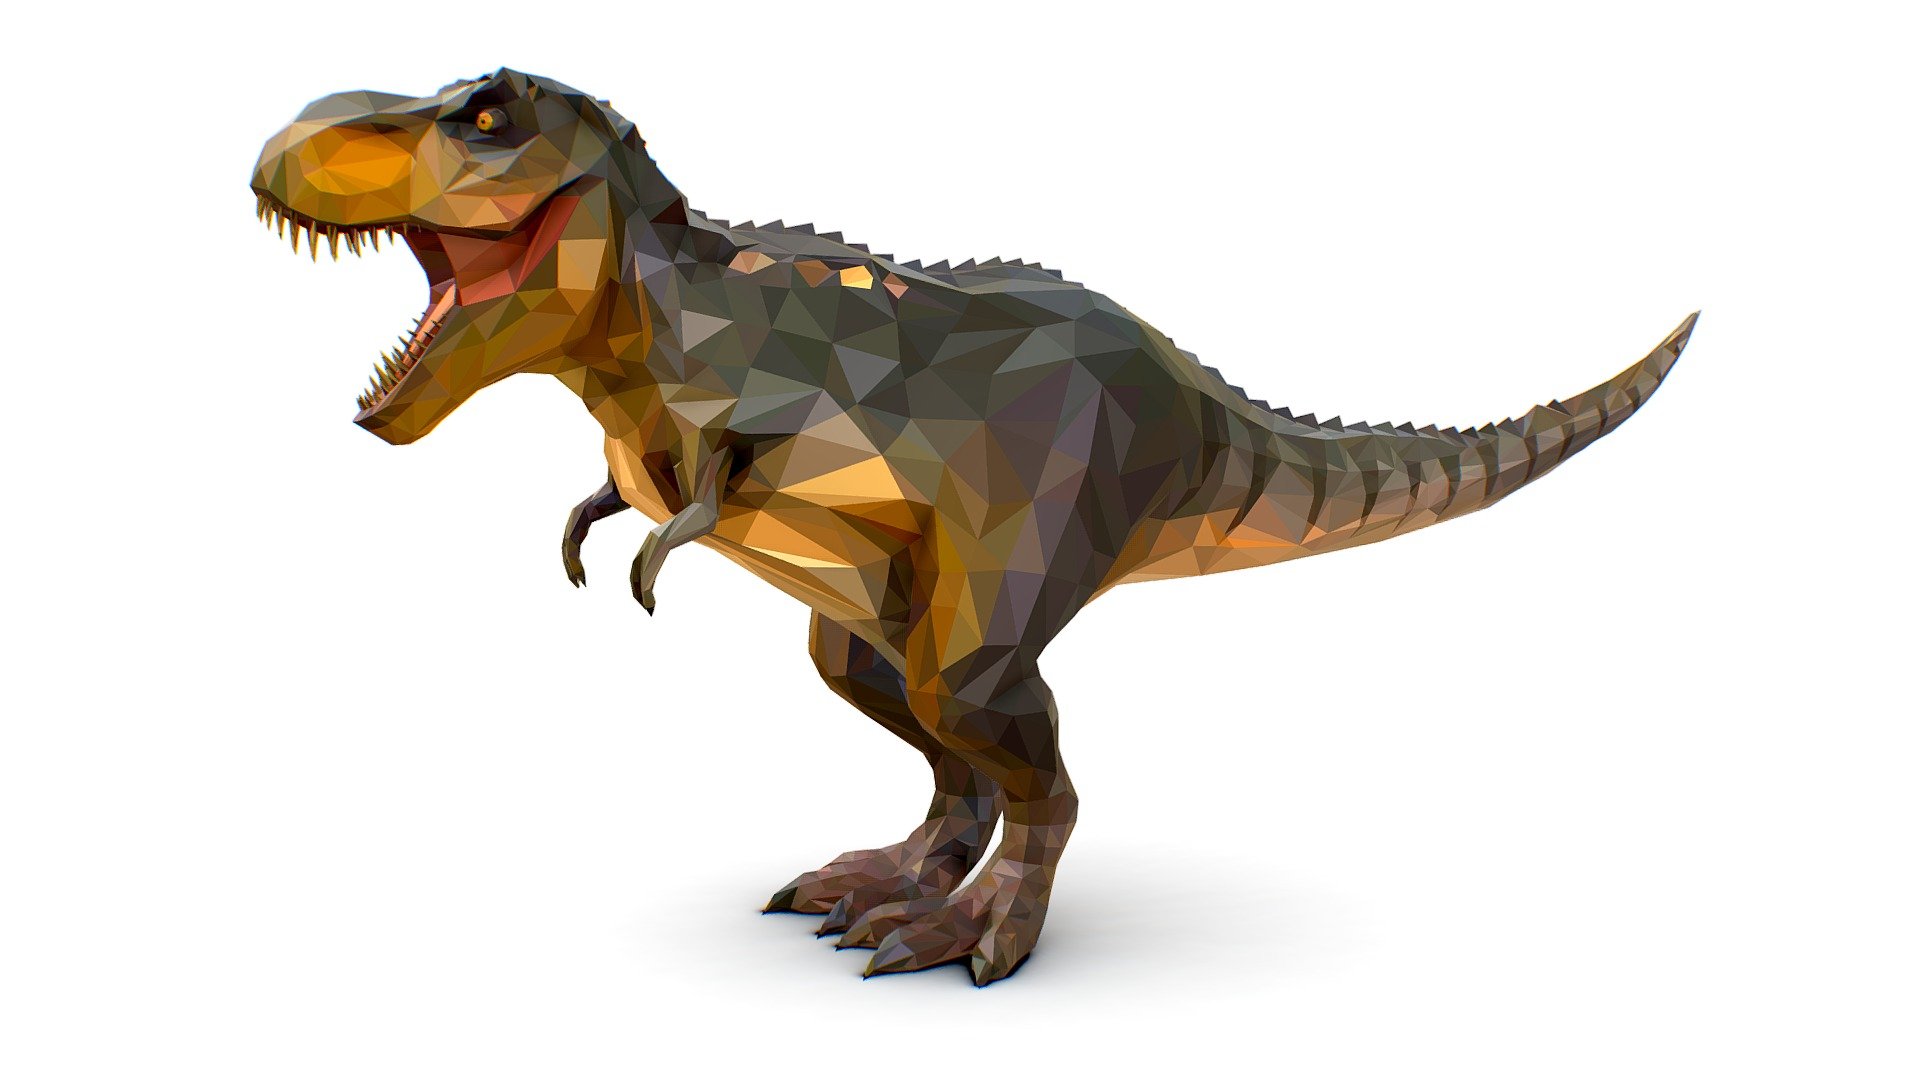 Support me on Patreon, please - https://www.patreon.com/art_book

Dinosaur T- Rex Lowpoly Art Style animal - Dinosaur T- Rex Lowpoly Art Style animal - Buy Royalty Free 3D model by Oleg Shuldiakov (@olegshuldiakov) 3d model